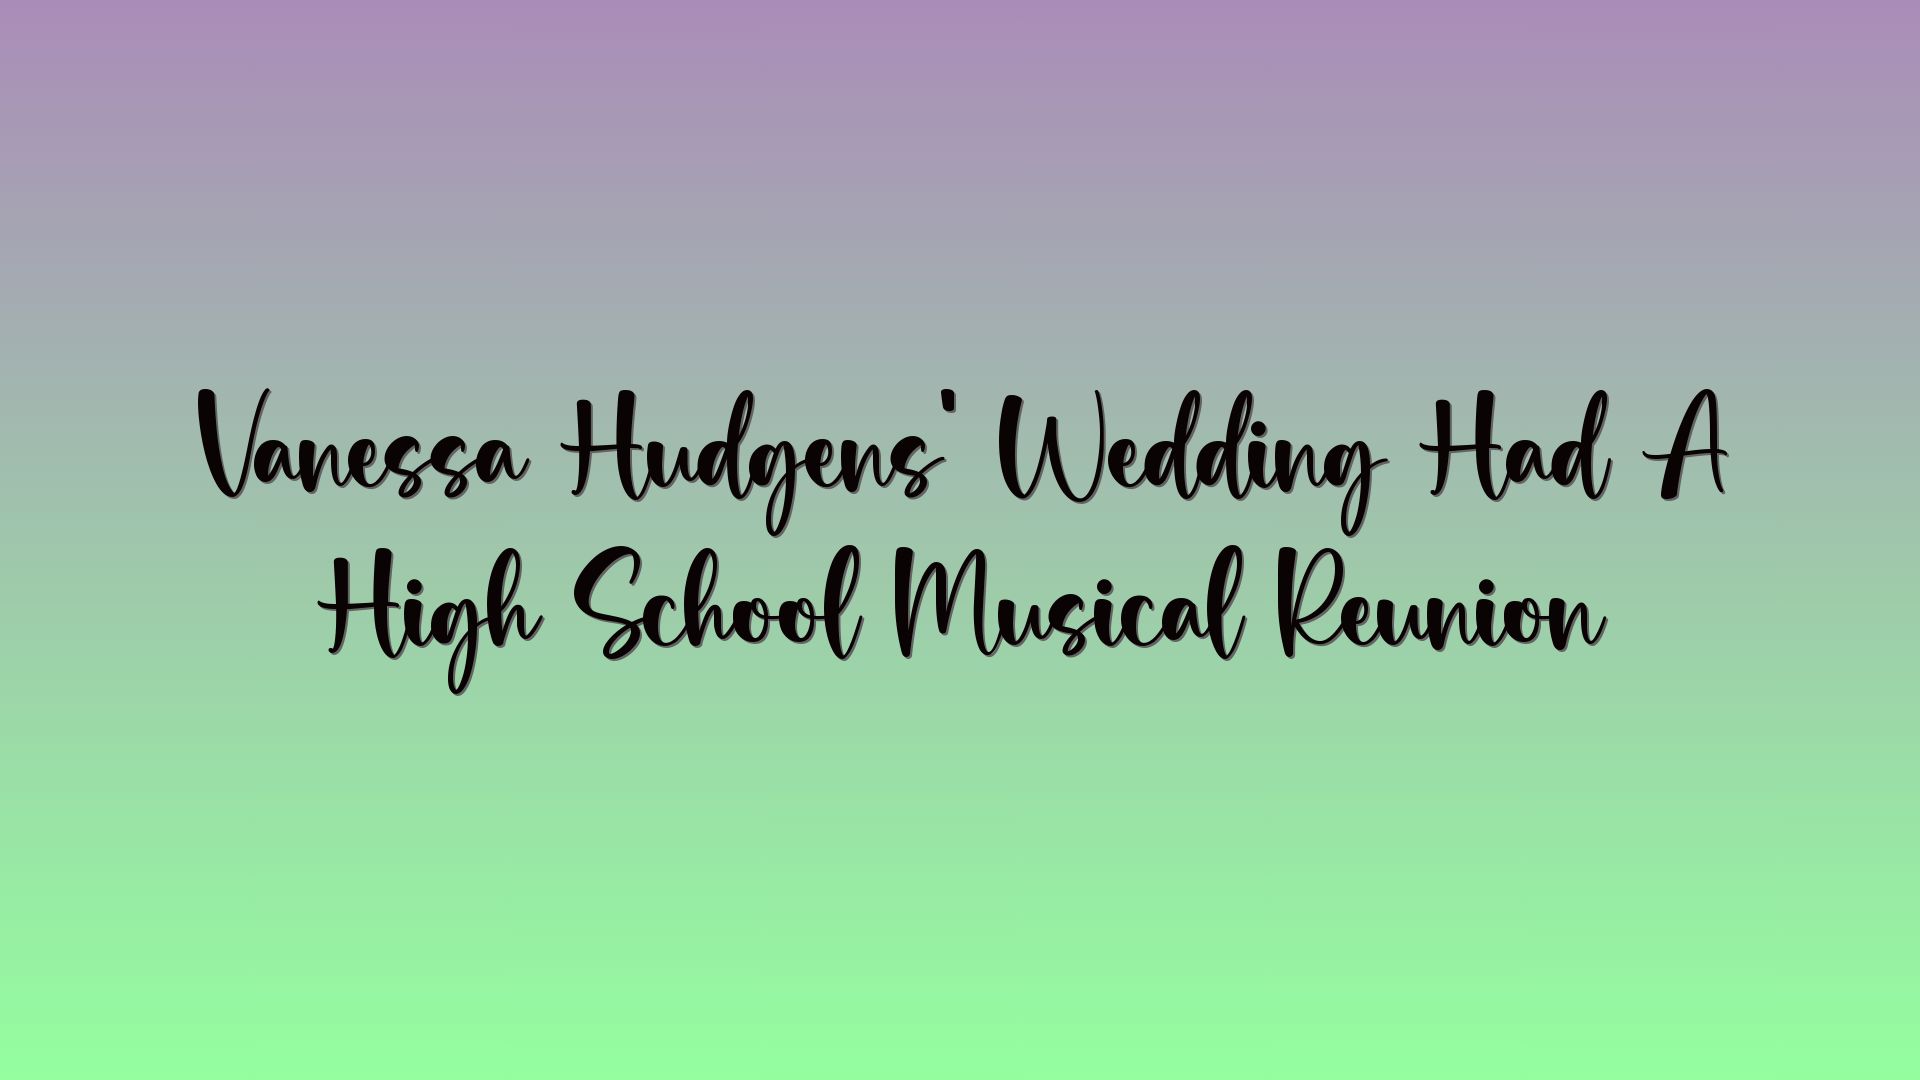 Vanessa Hudgens’ Wedding Had A High School Musical Reunion